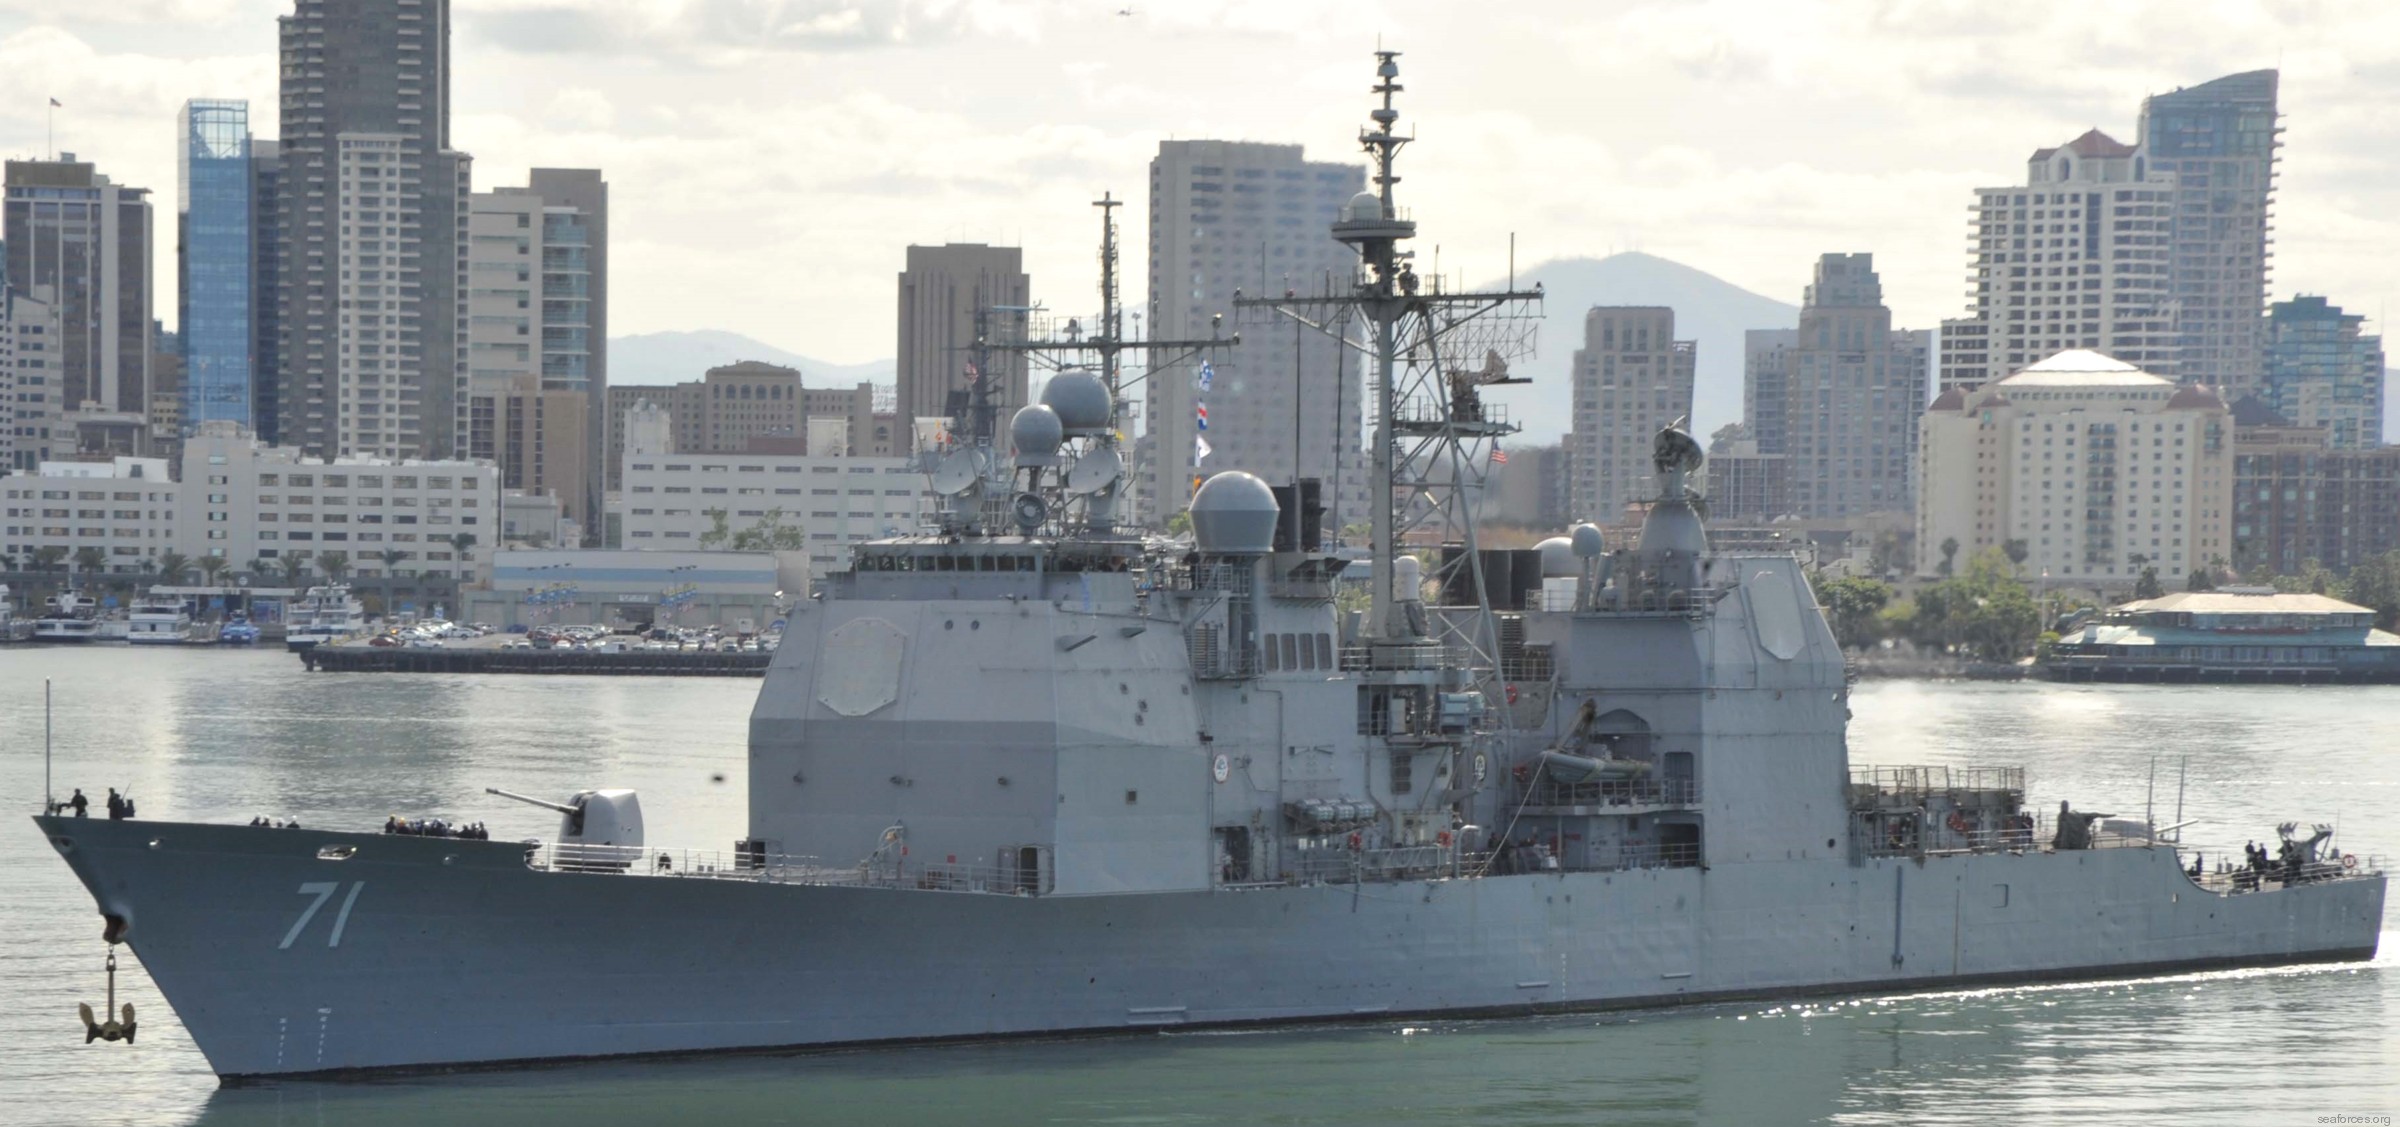 cg-71 uss cape st. george ticonderoga class guided missile cruiser us navy 10 san diego california